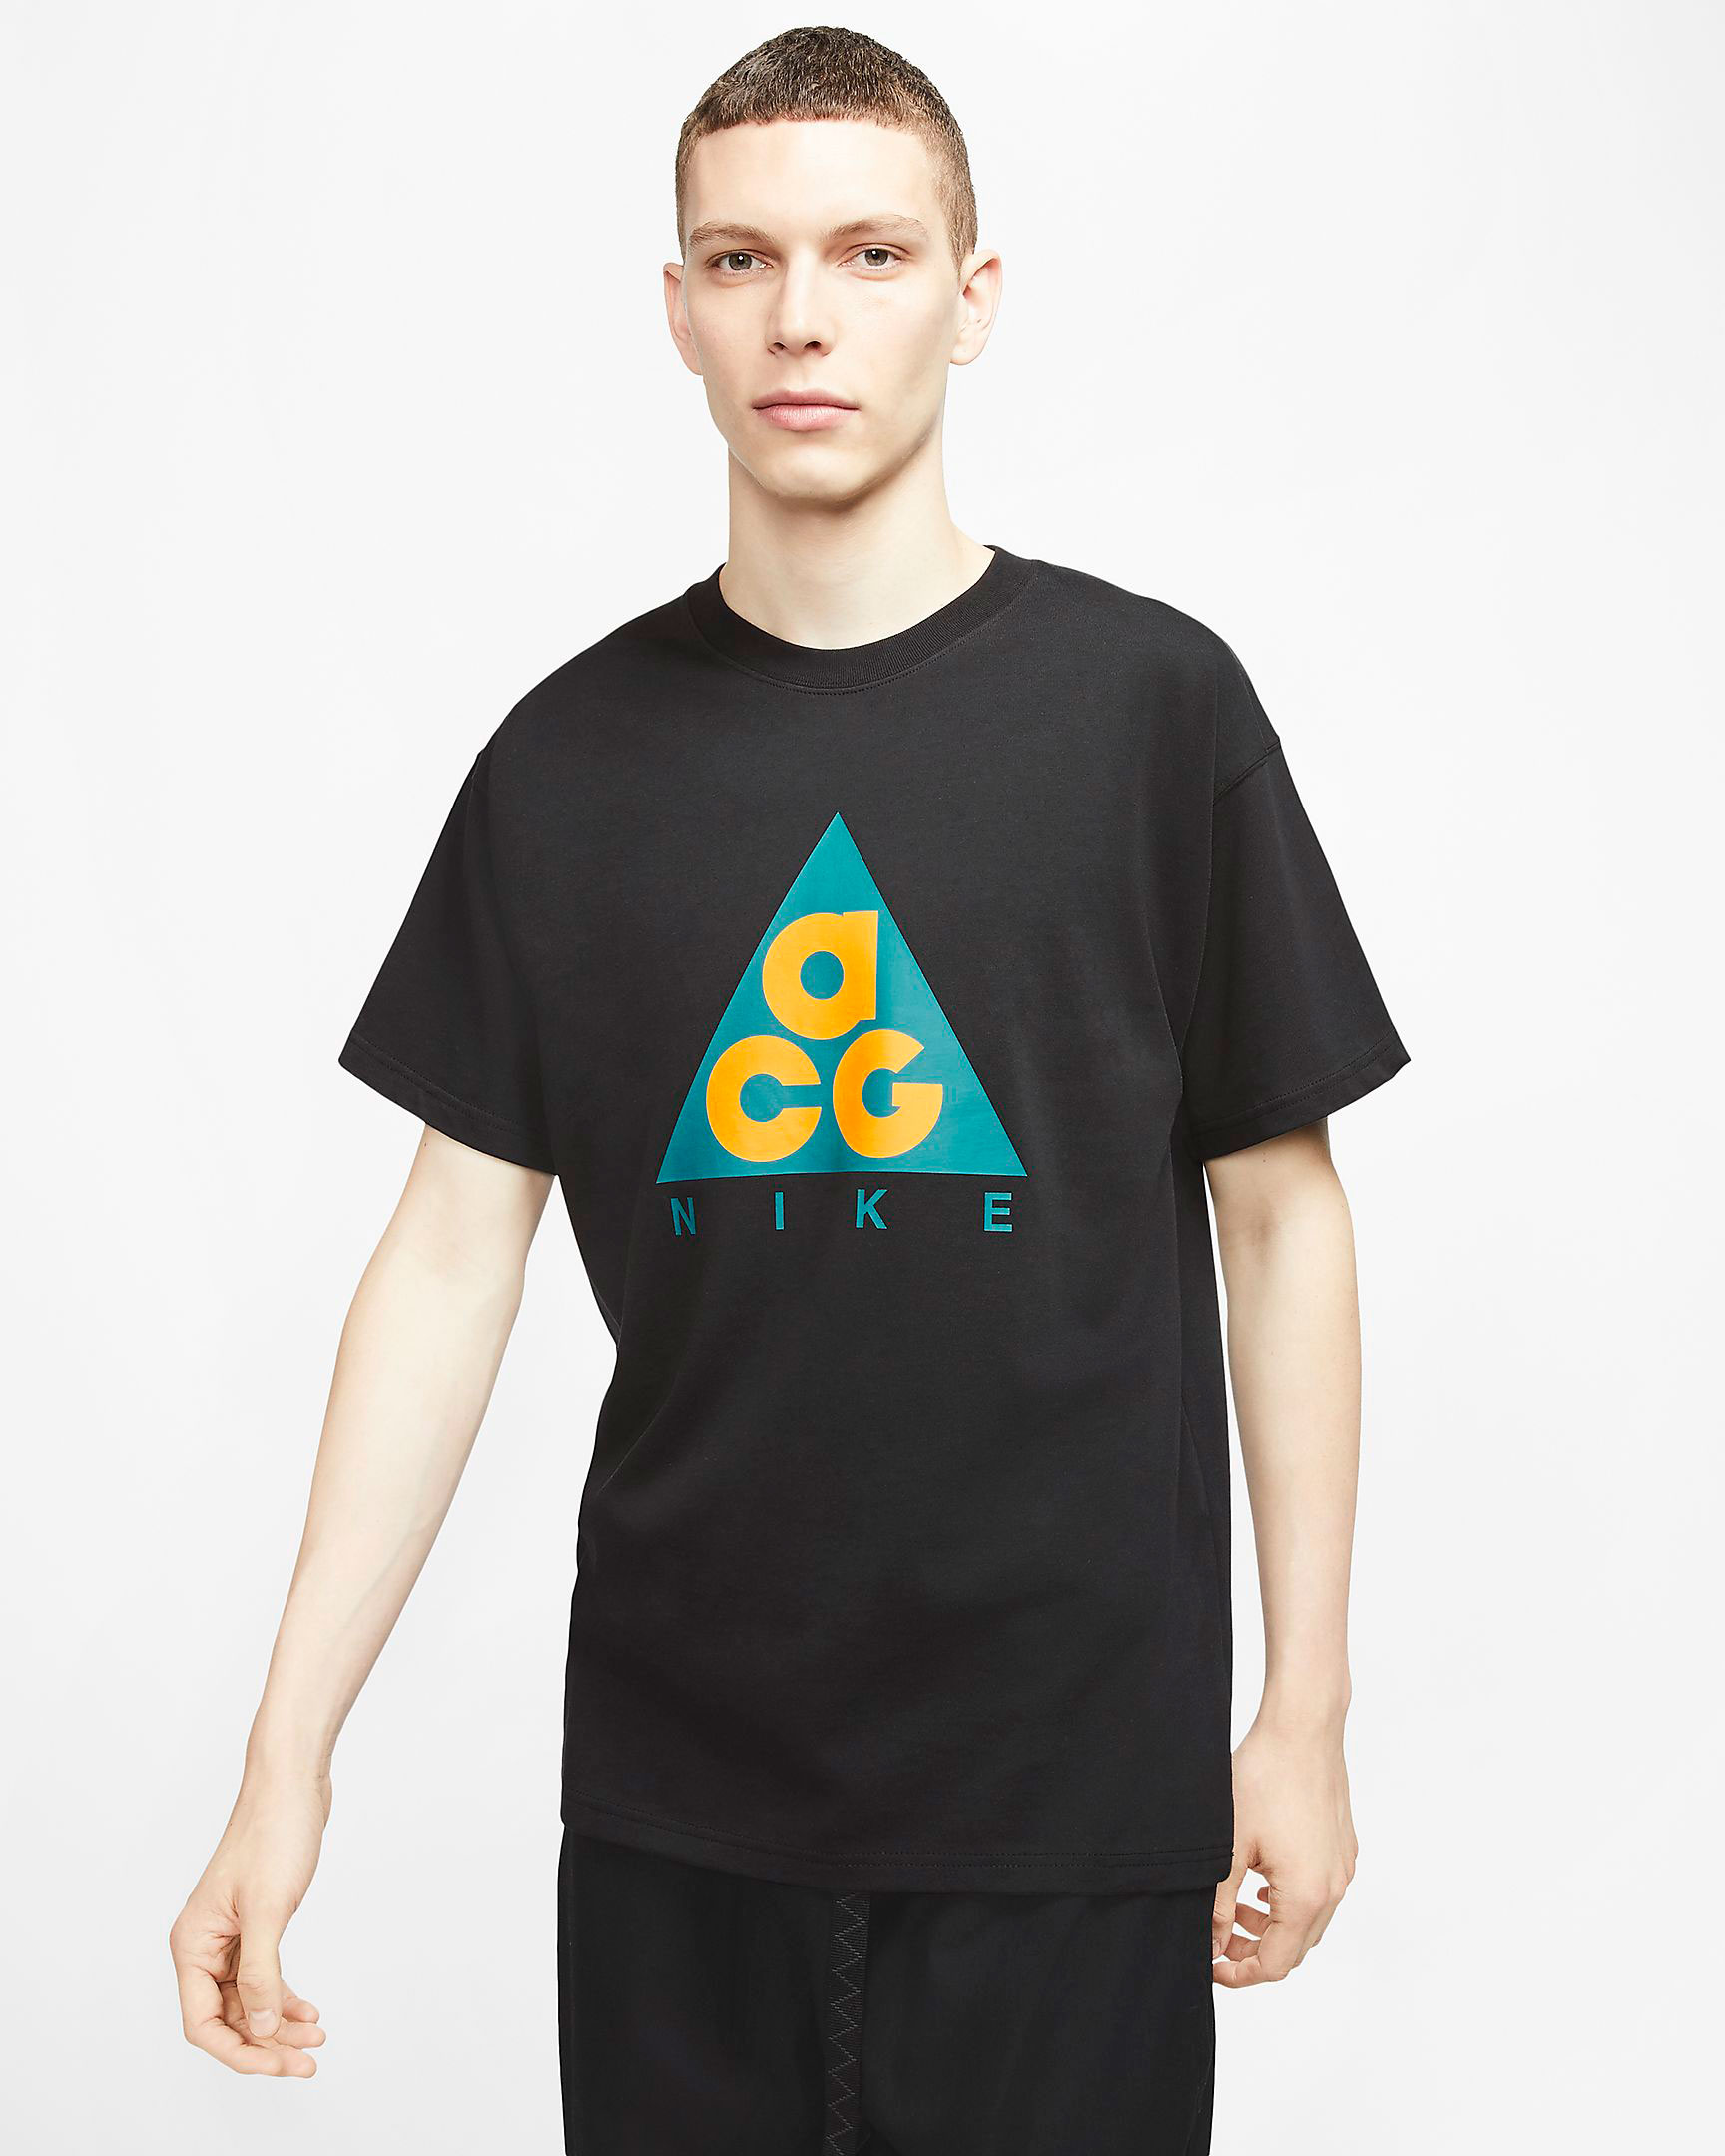 nike-acg-logo-t-shirt-black-teal